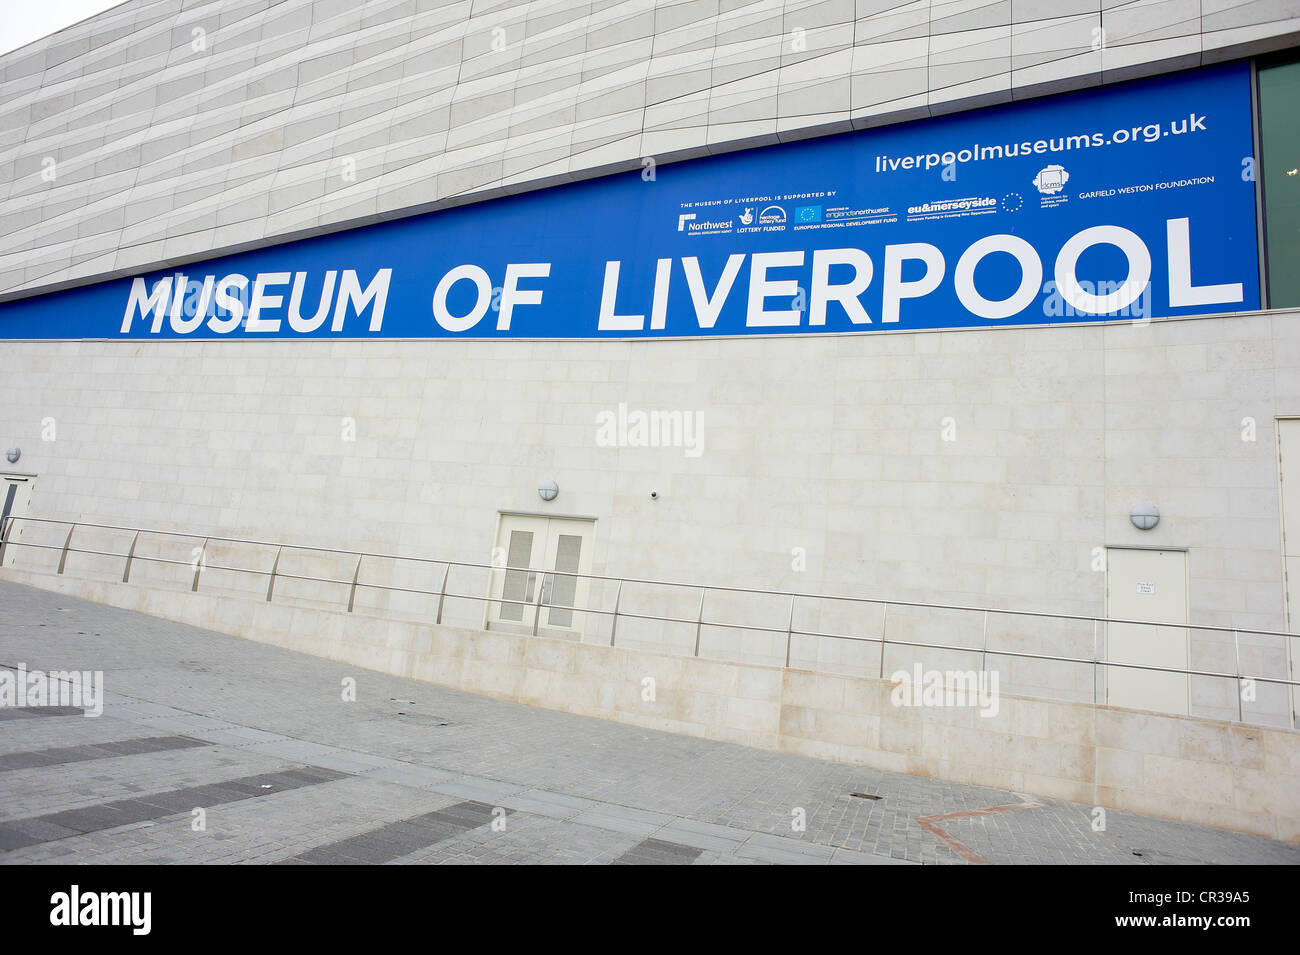 Museum of Liverpool, Liverpool, UK. Stock Photo